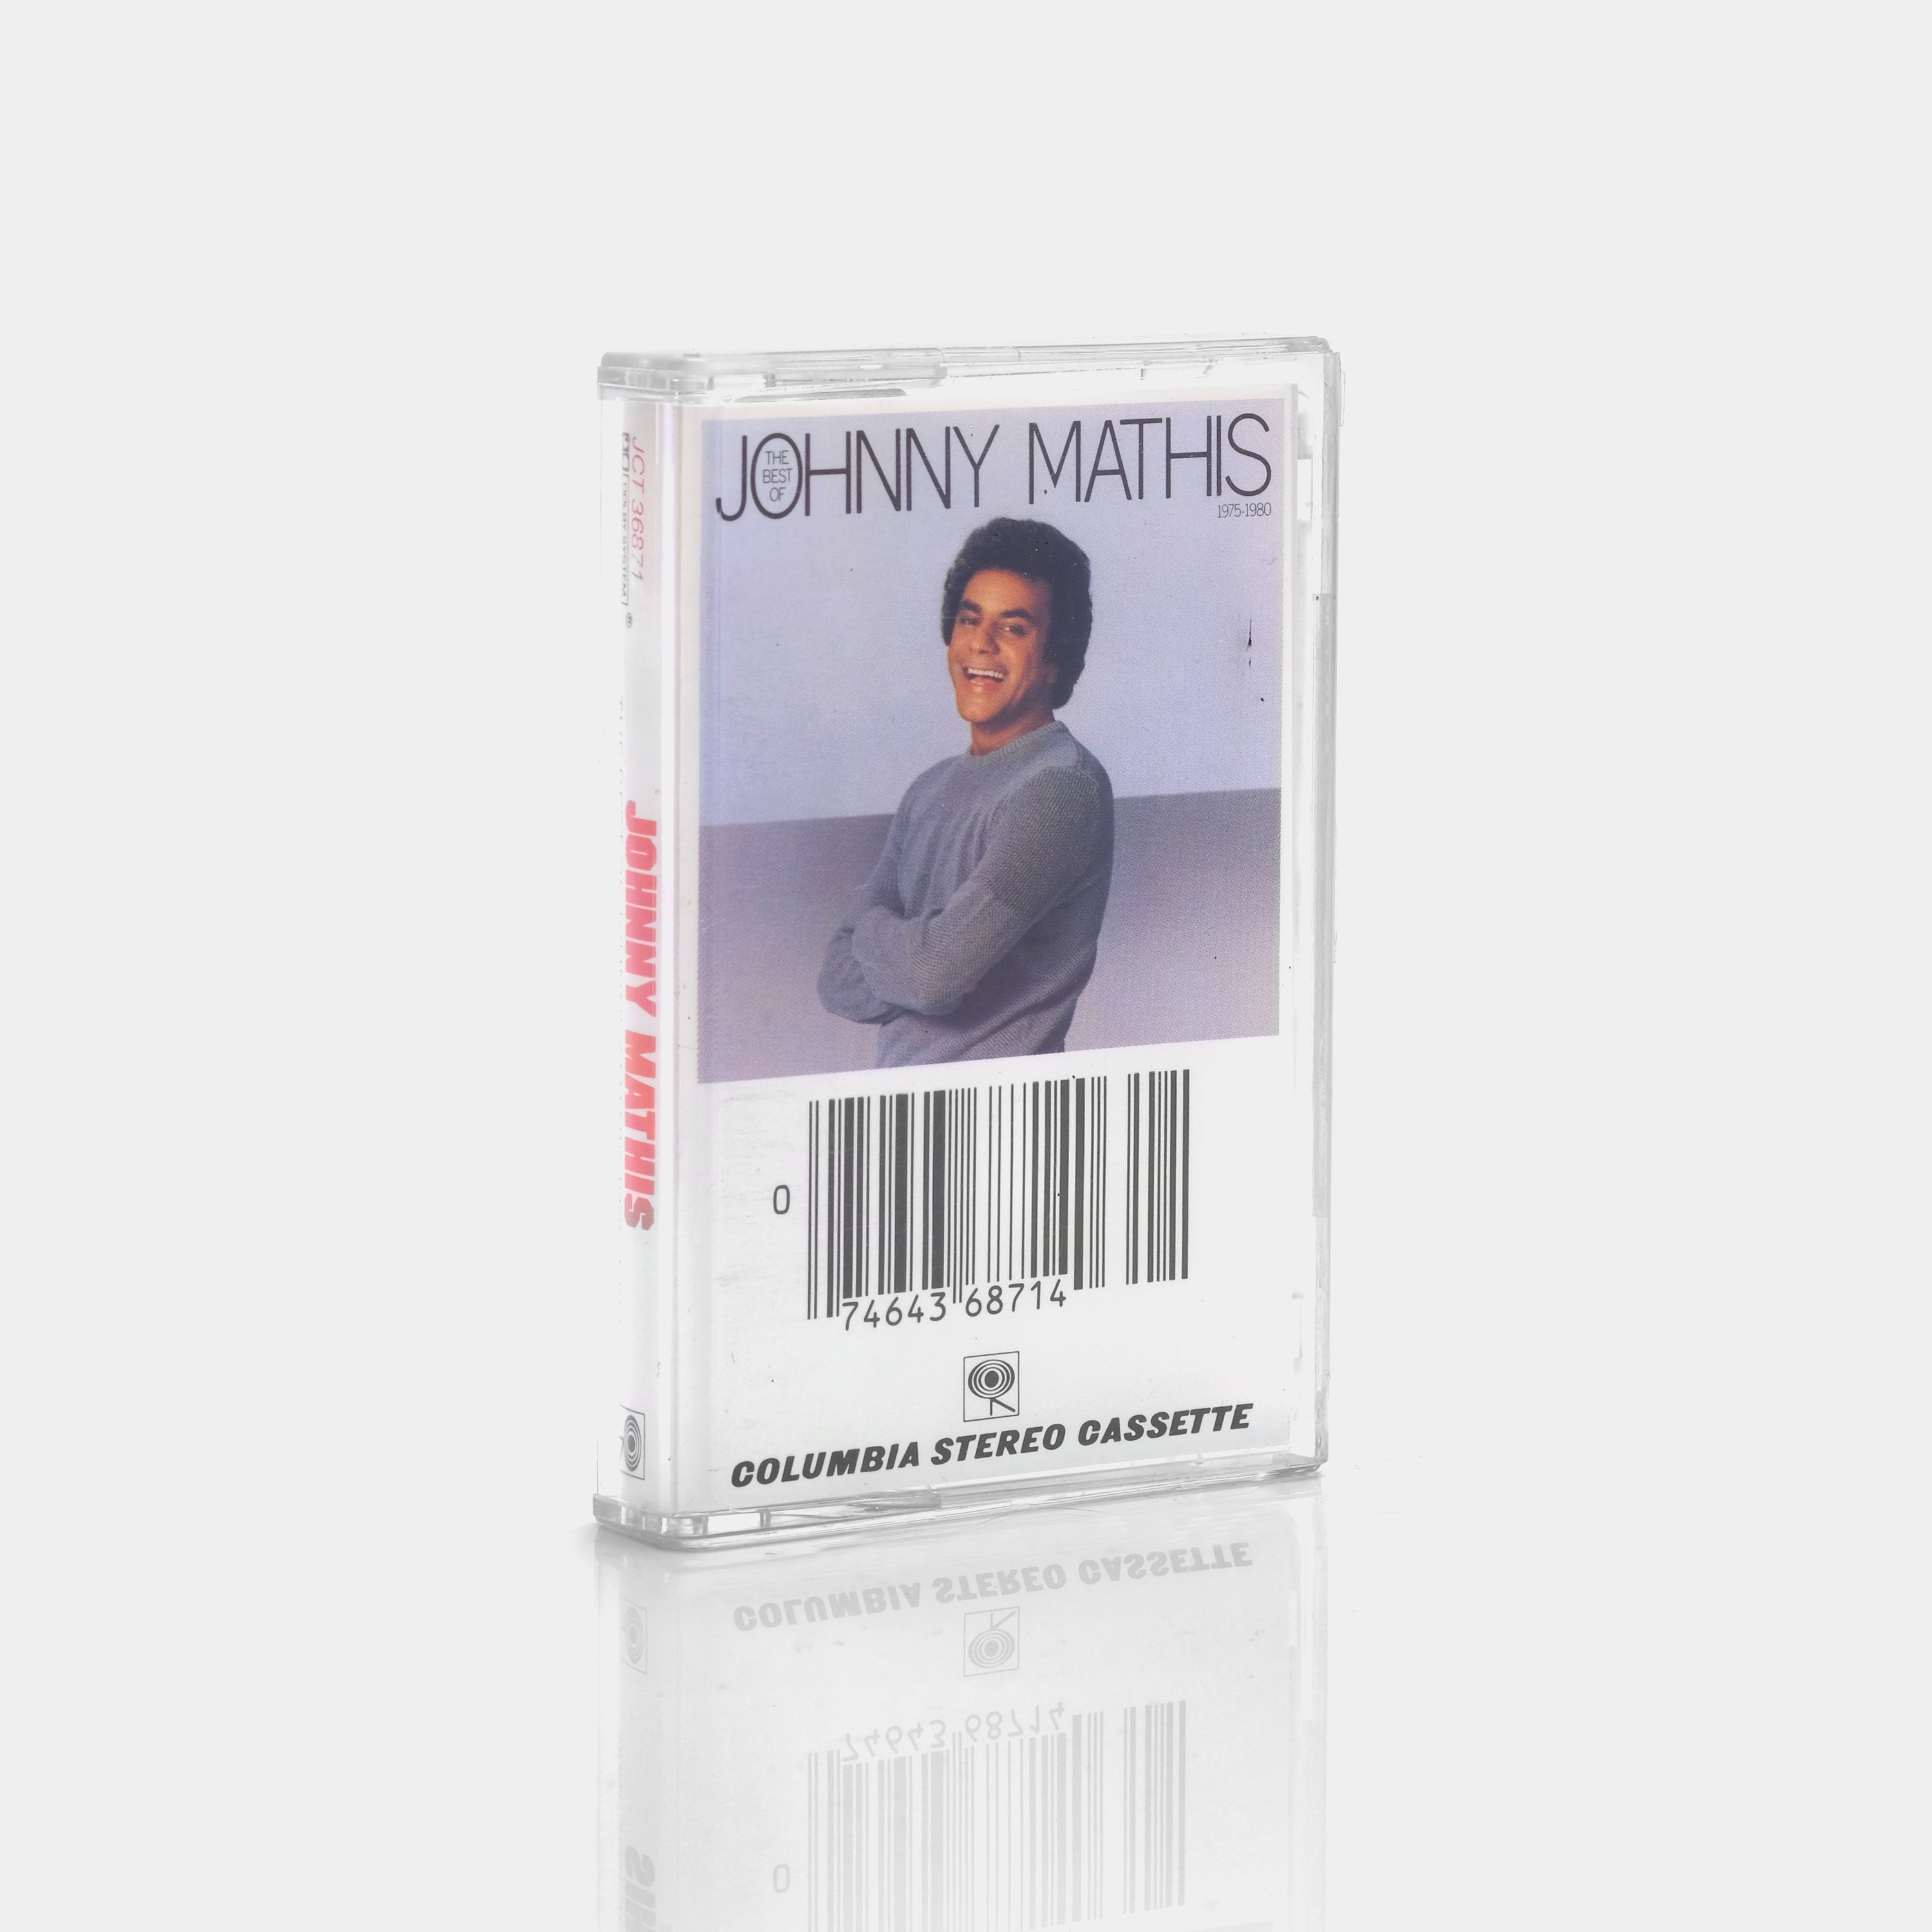 Johnny Mathis - The Best Of Johnny Mathis 1975-1980 Cassette Tape